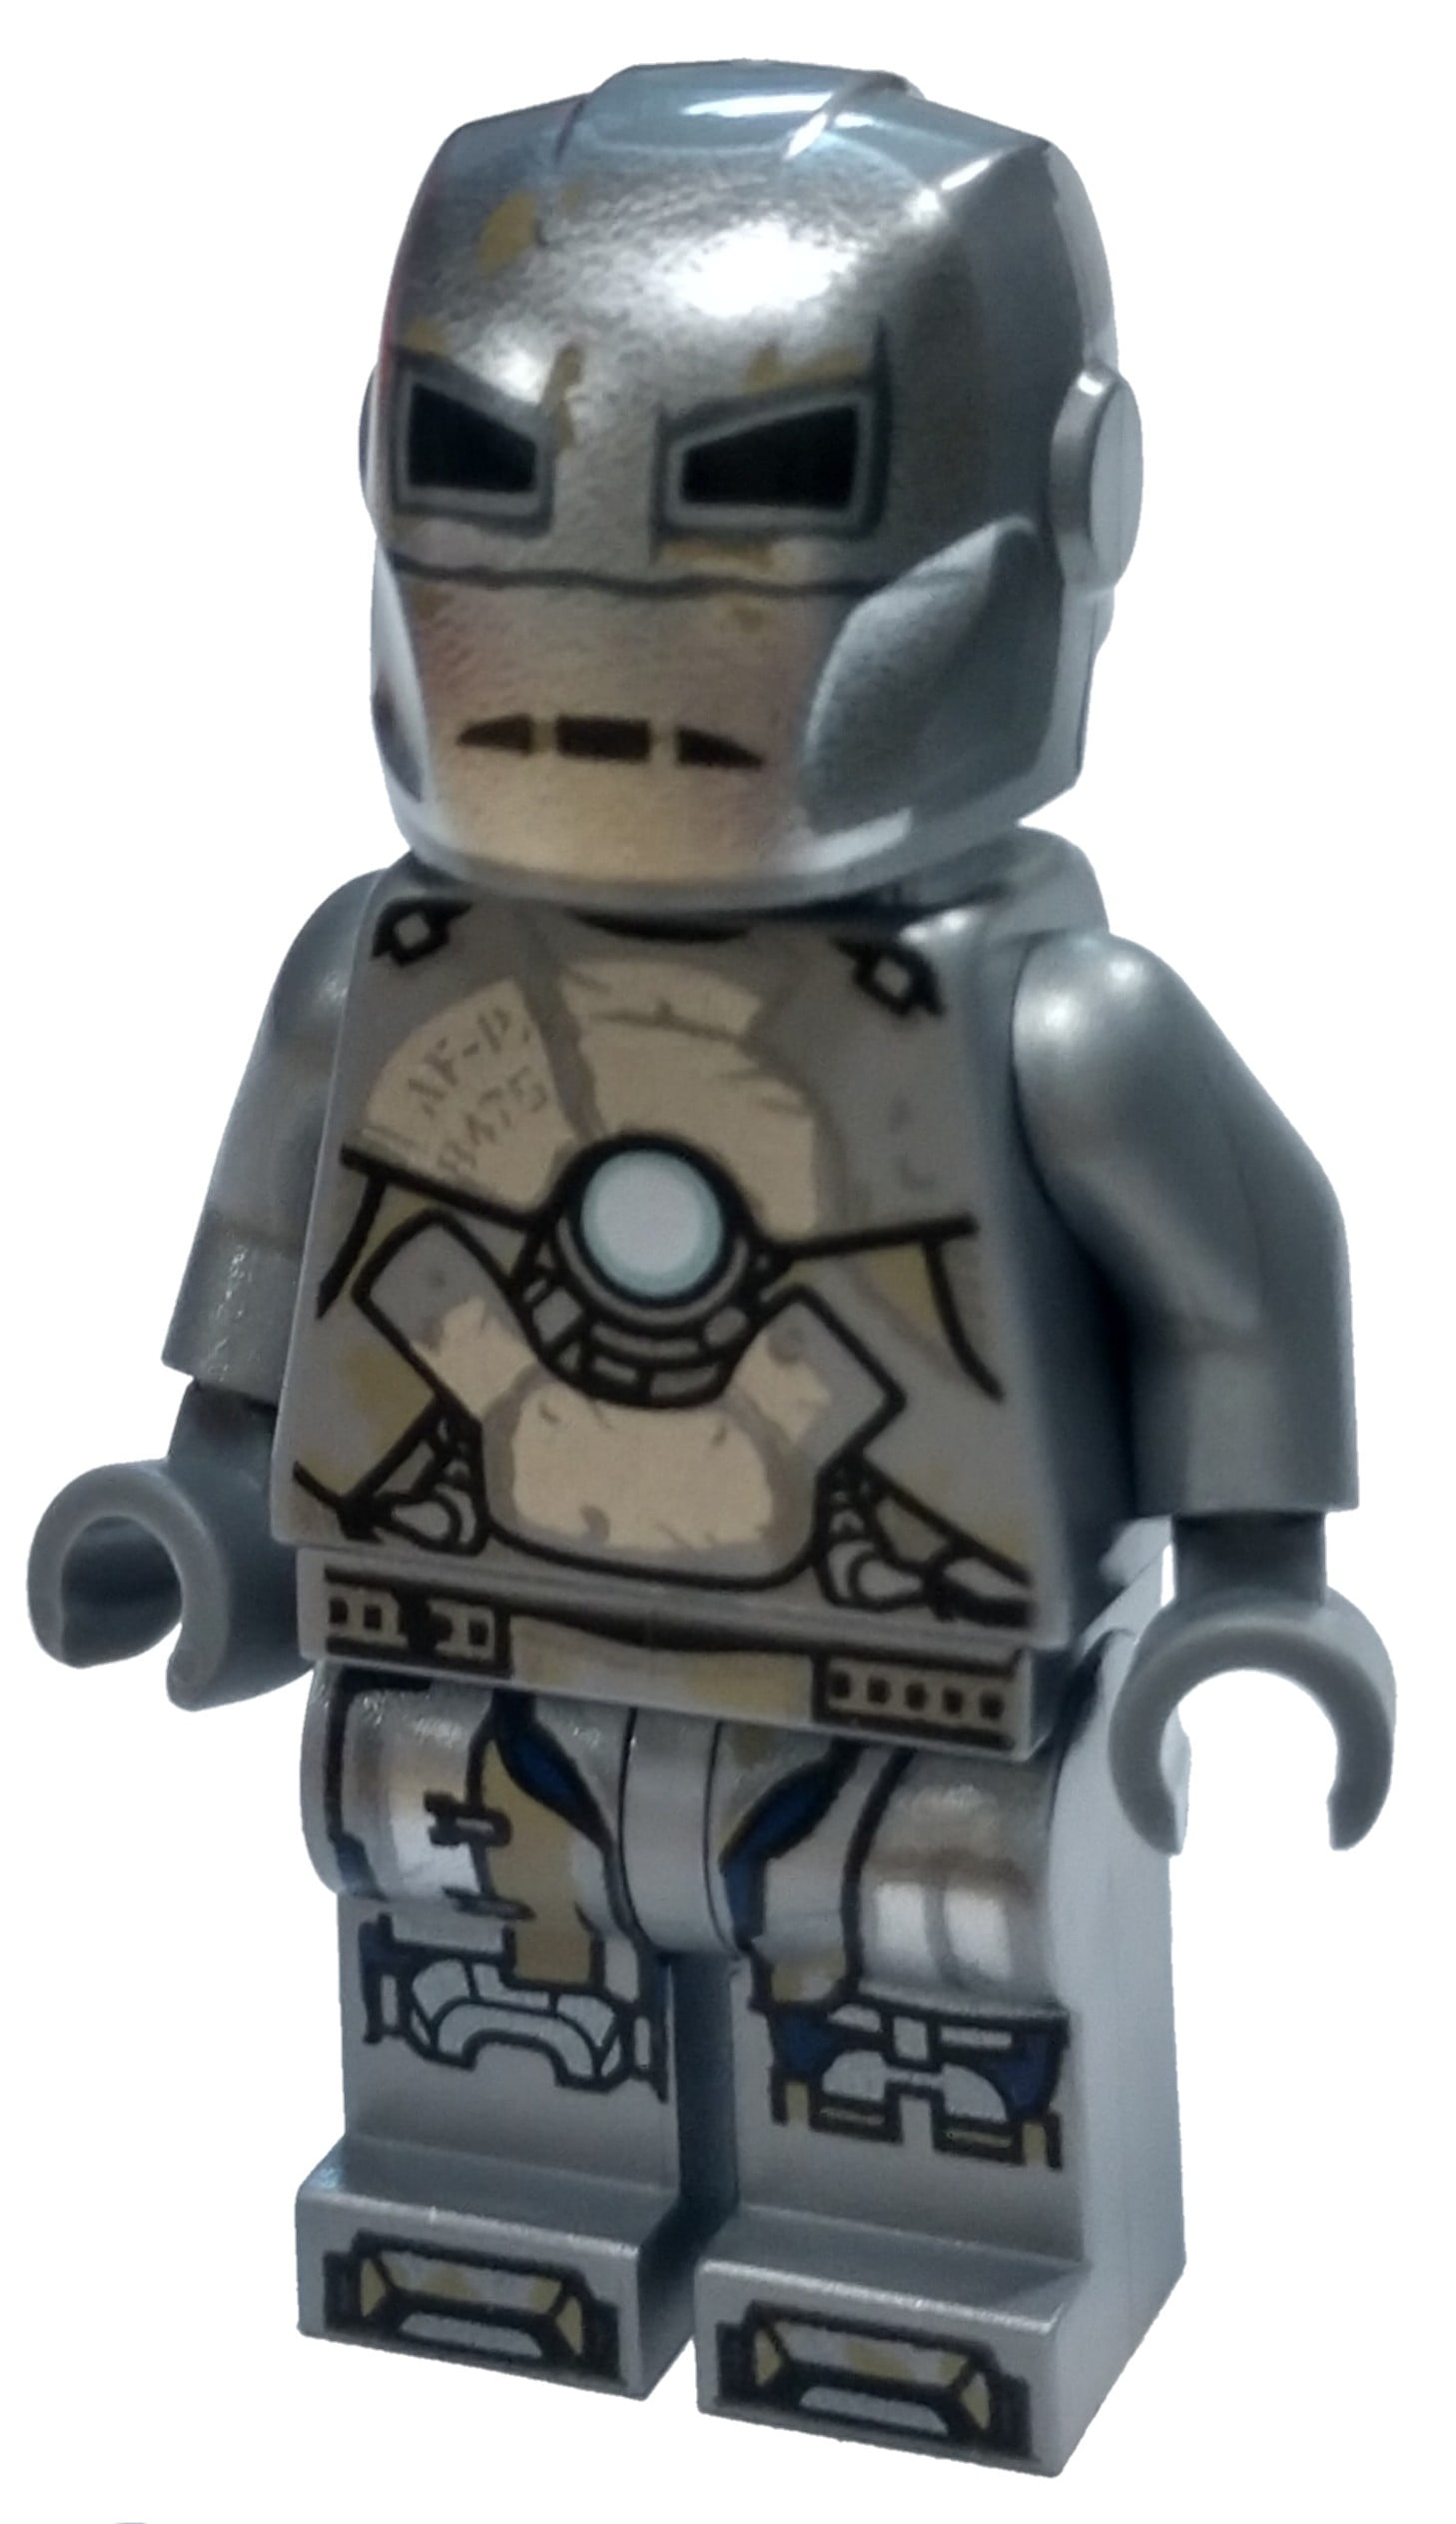 LEGO Marvel Avengers Endgame Iron Man Mark 20 Armor Minifigure [Trans Clear  Head] [No Packaging]